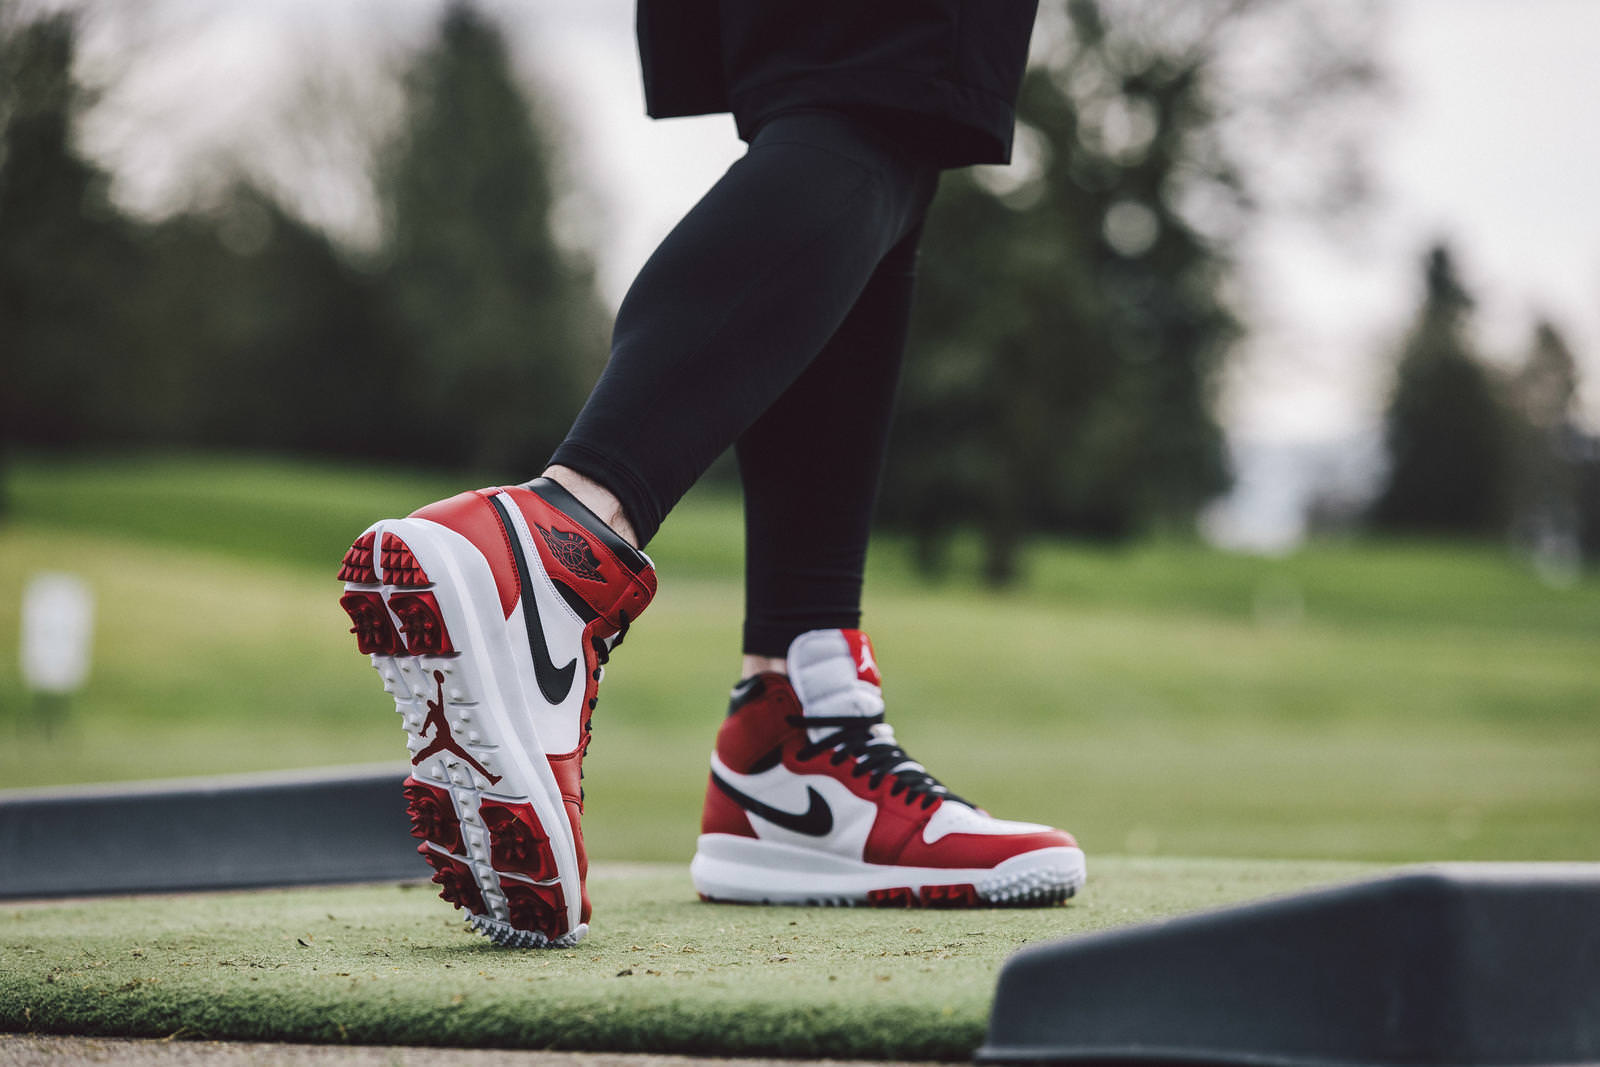 schedel Ontmoedigen Gehoorzaam Nike go back to the future with Air Jordan golf shoes - National Club Golfer